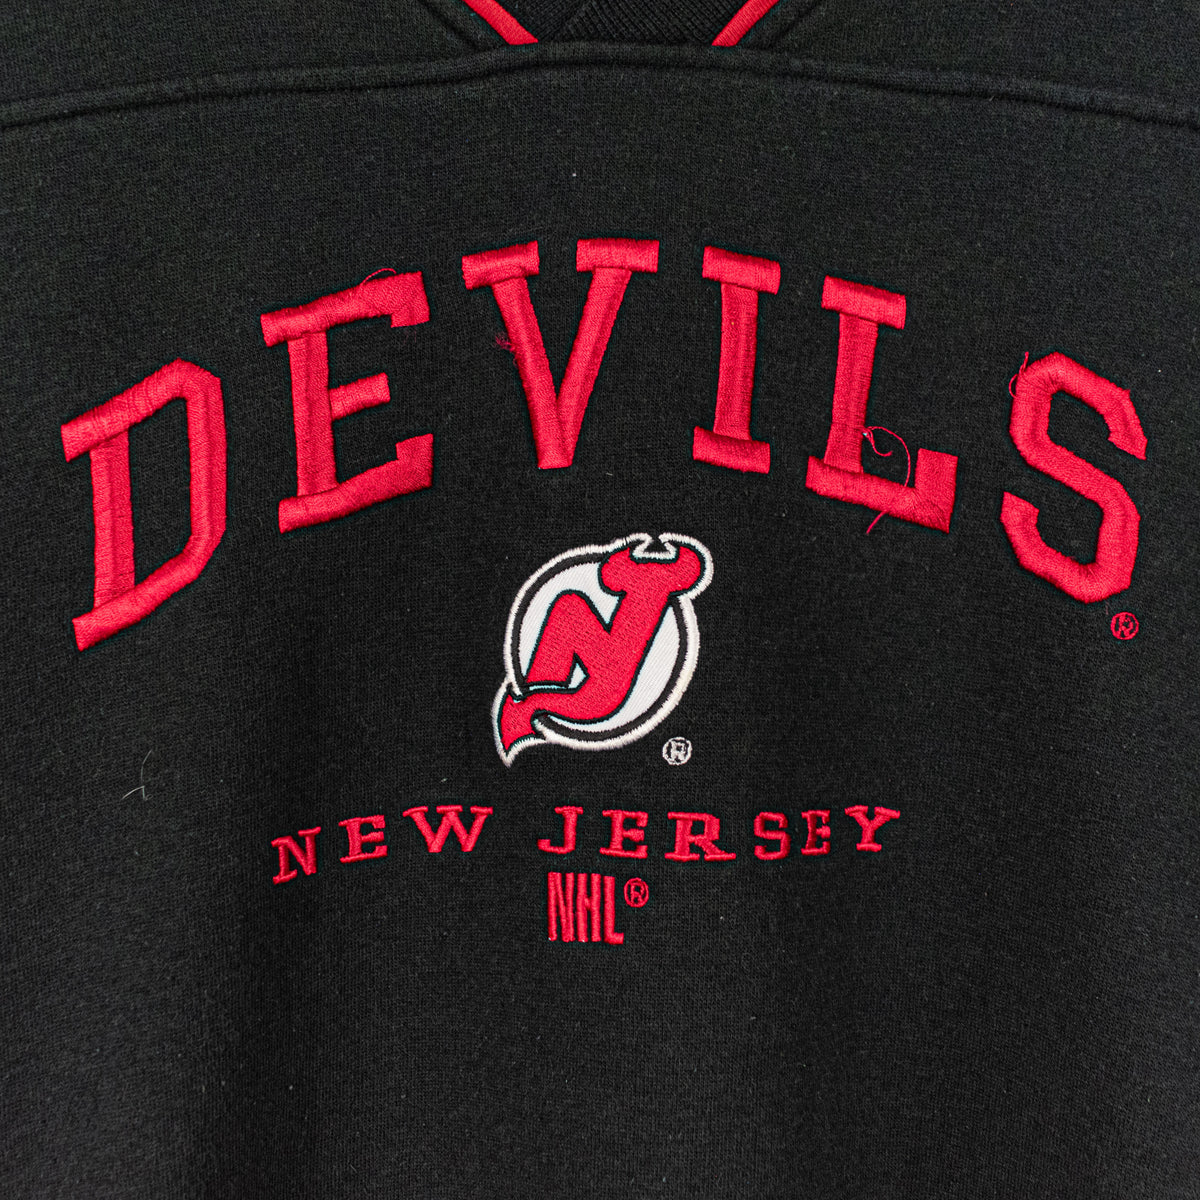 LEE Sport NHL New Jersey Devils Embroidered Sweatshirt